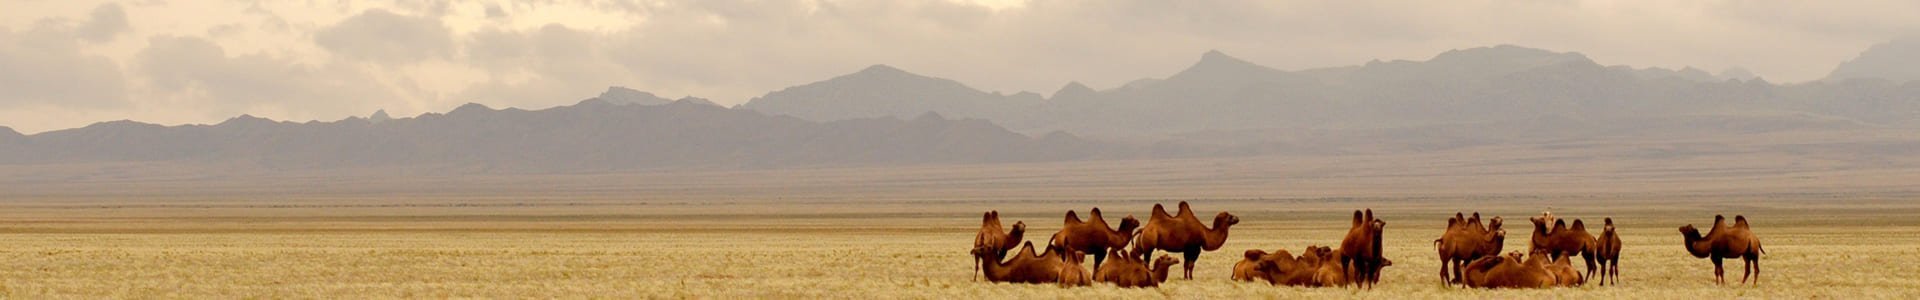 Gobi-woestijn, Mongolië